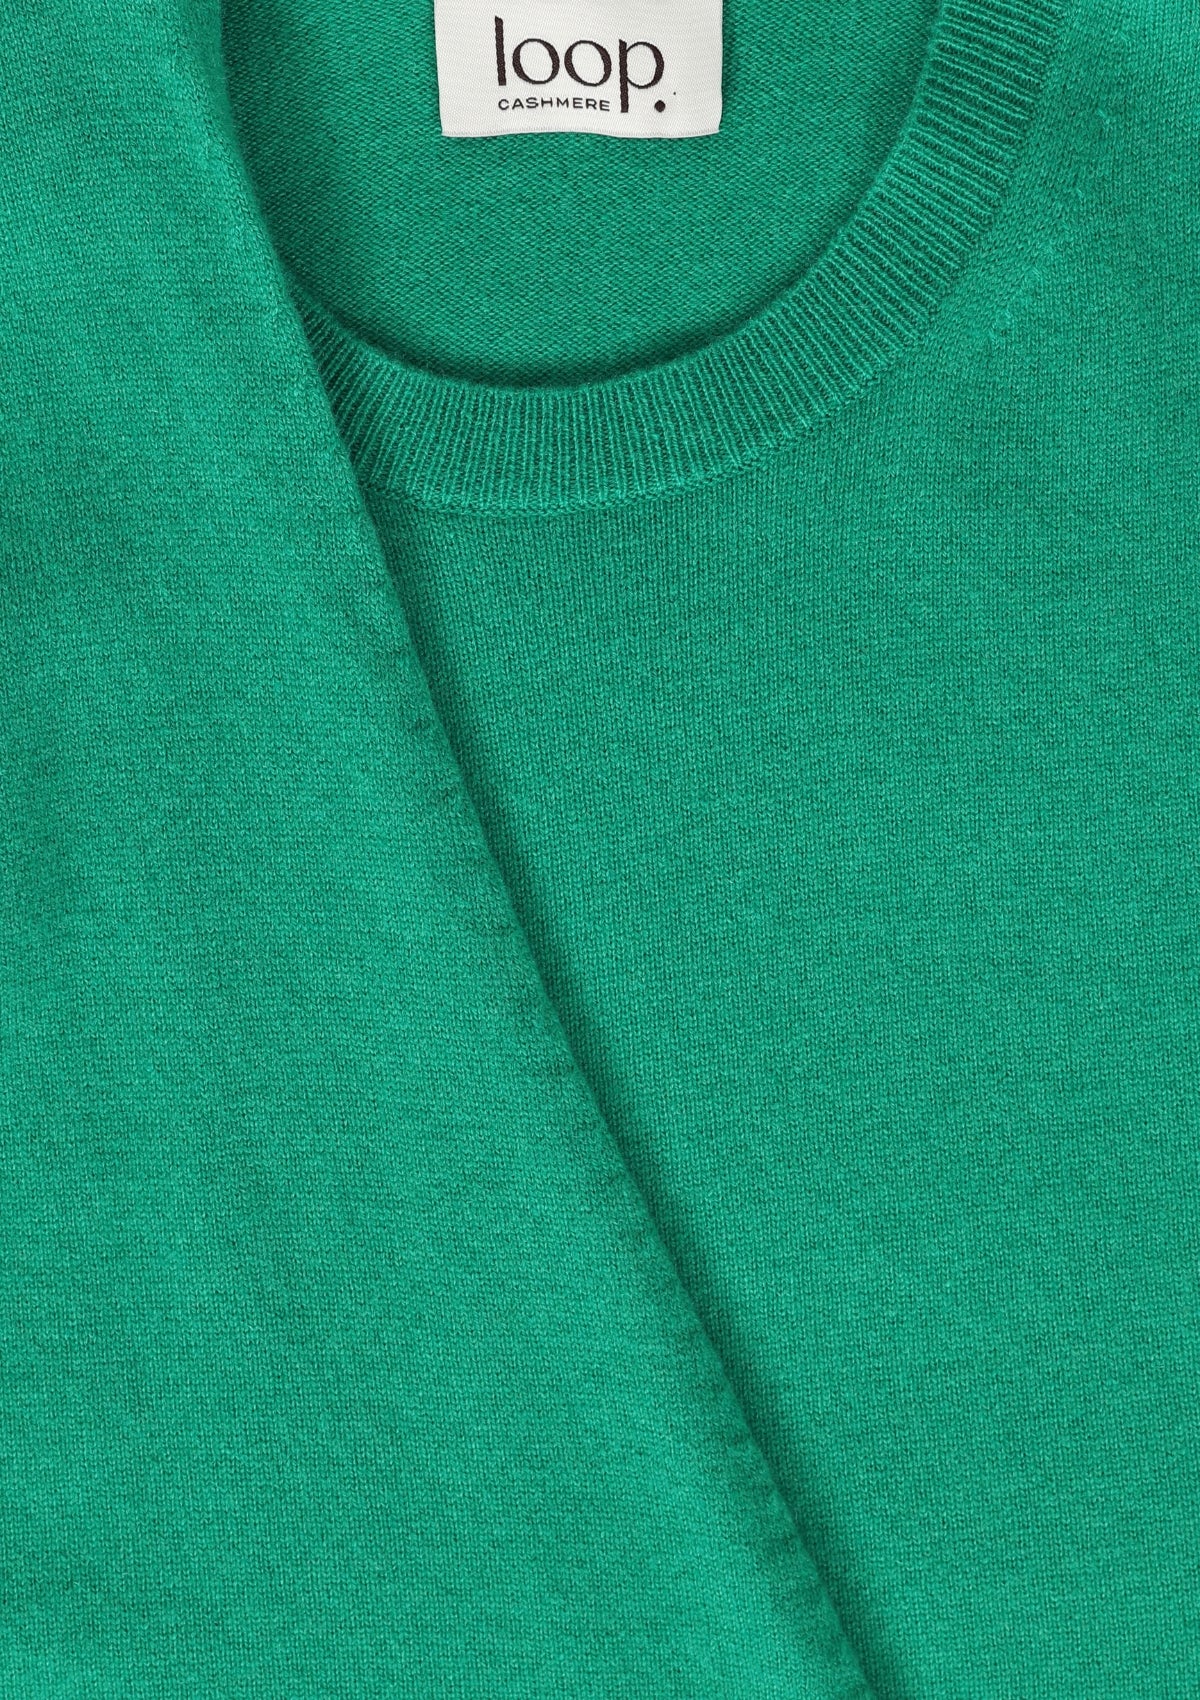 Ruched Cashmere Sweatshirt in Island Green